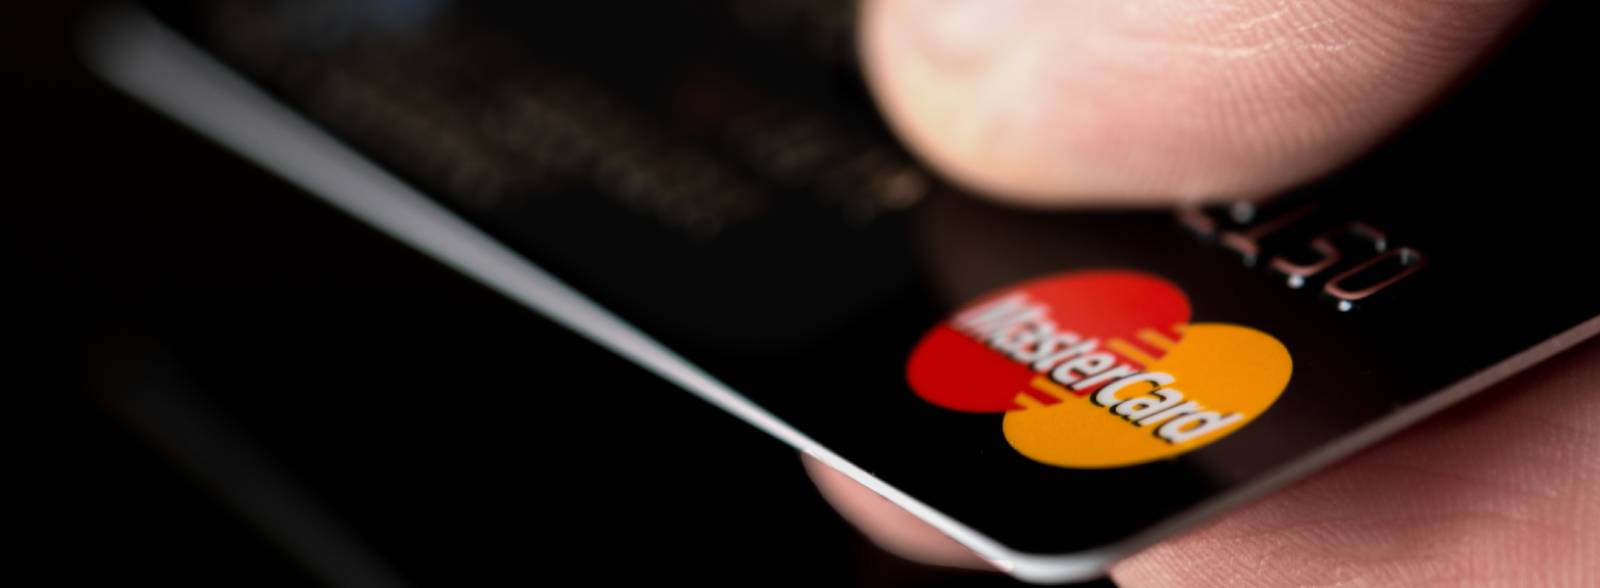 MasterCard Credit Card chargeback